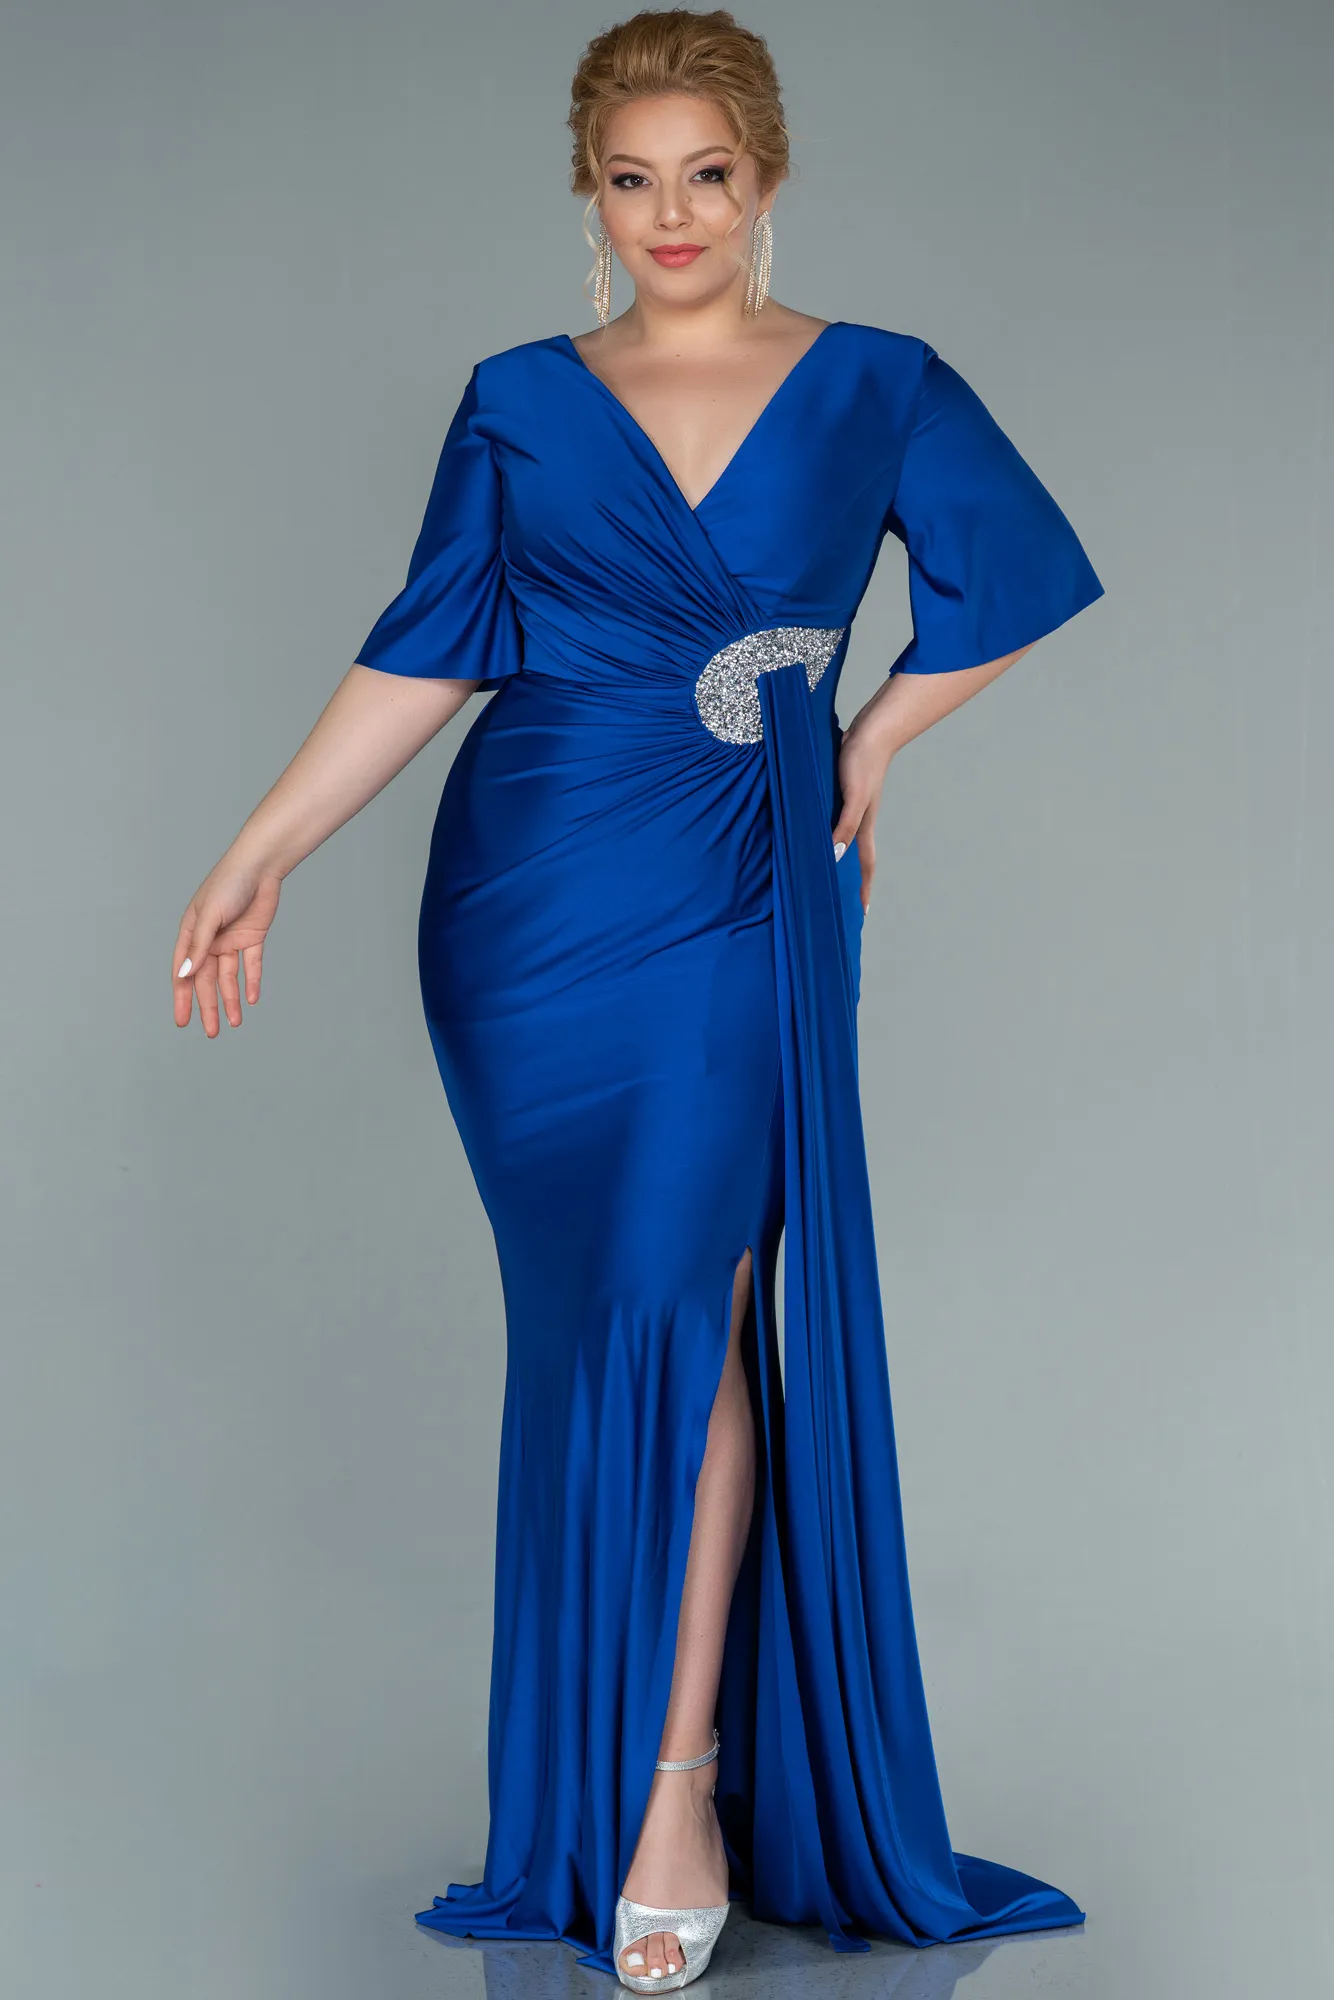 Sax Blue-Long Plus Size Evening Dress ABU2441